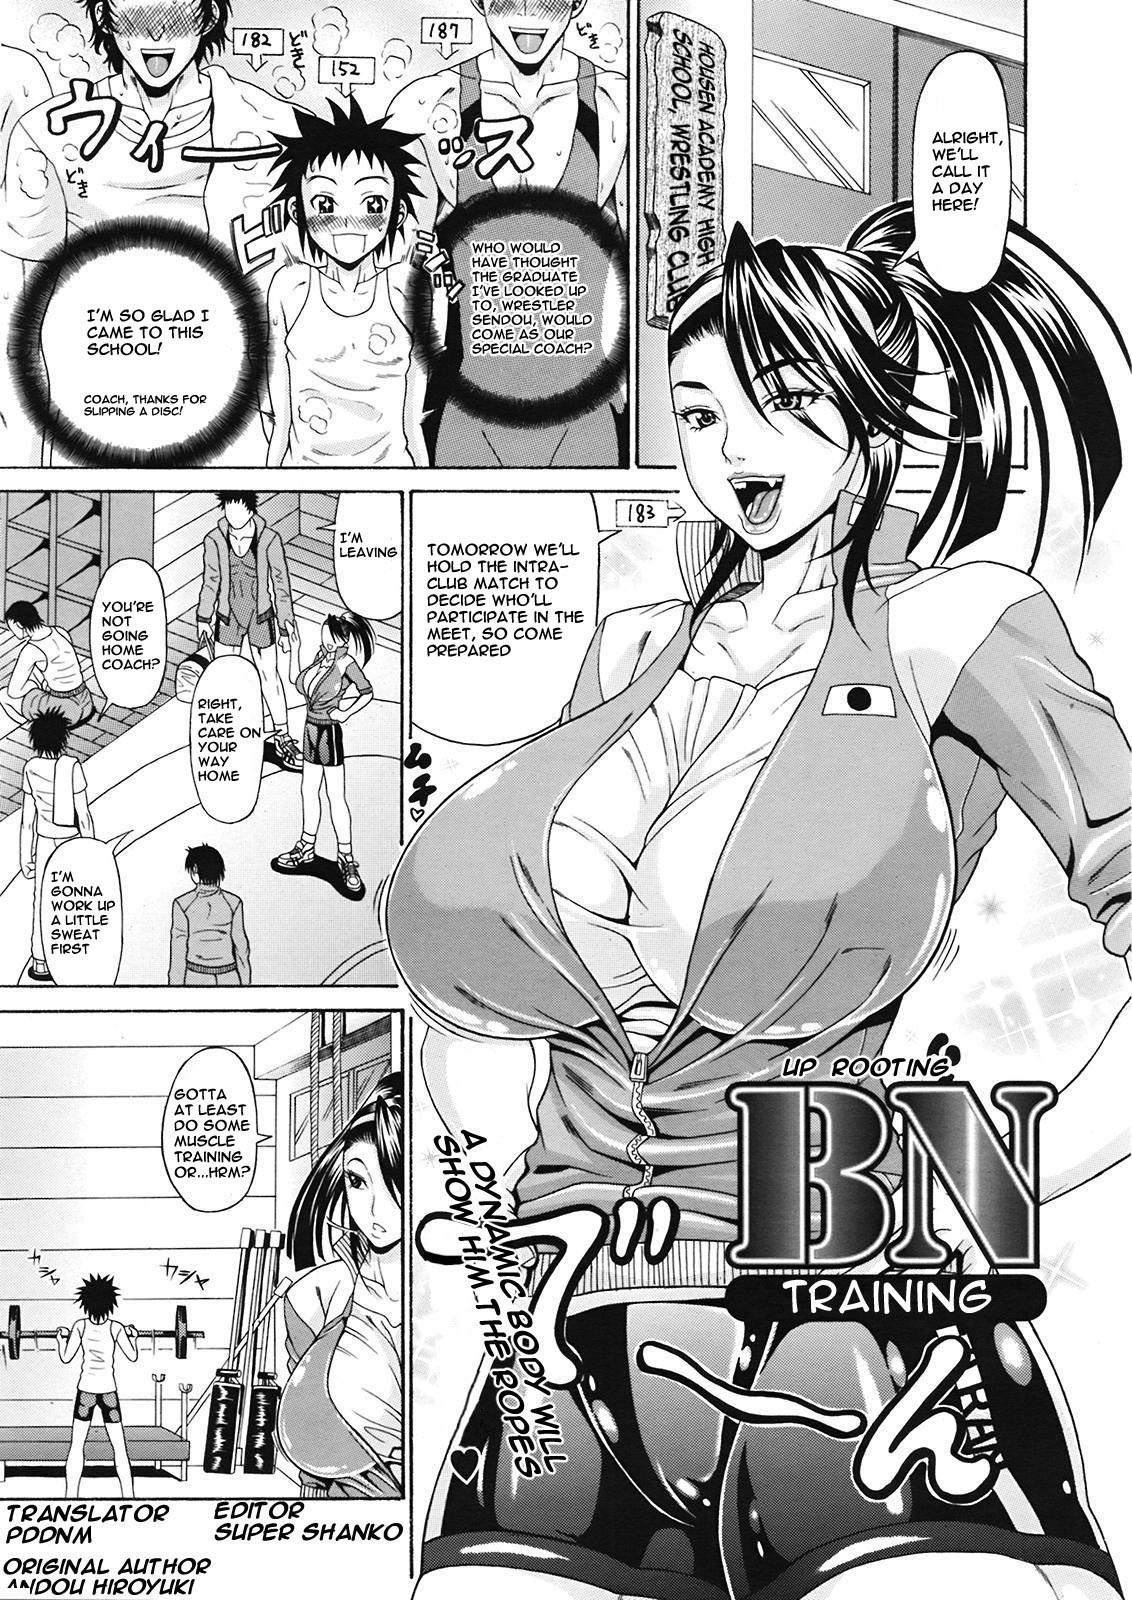 [Andou Hiroyuki] BN Training [English] page 1 full